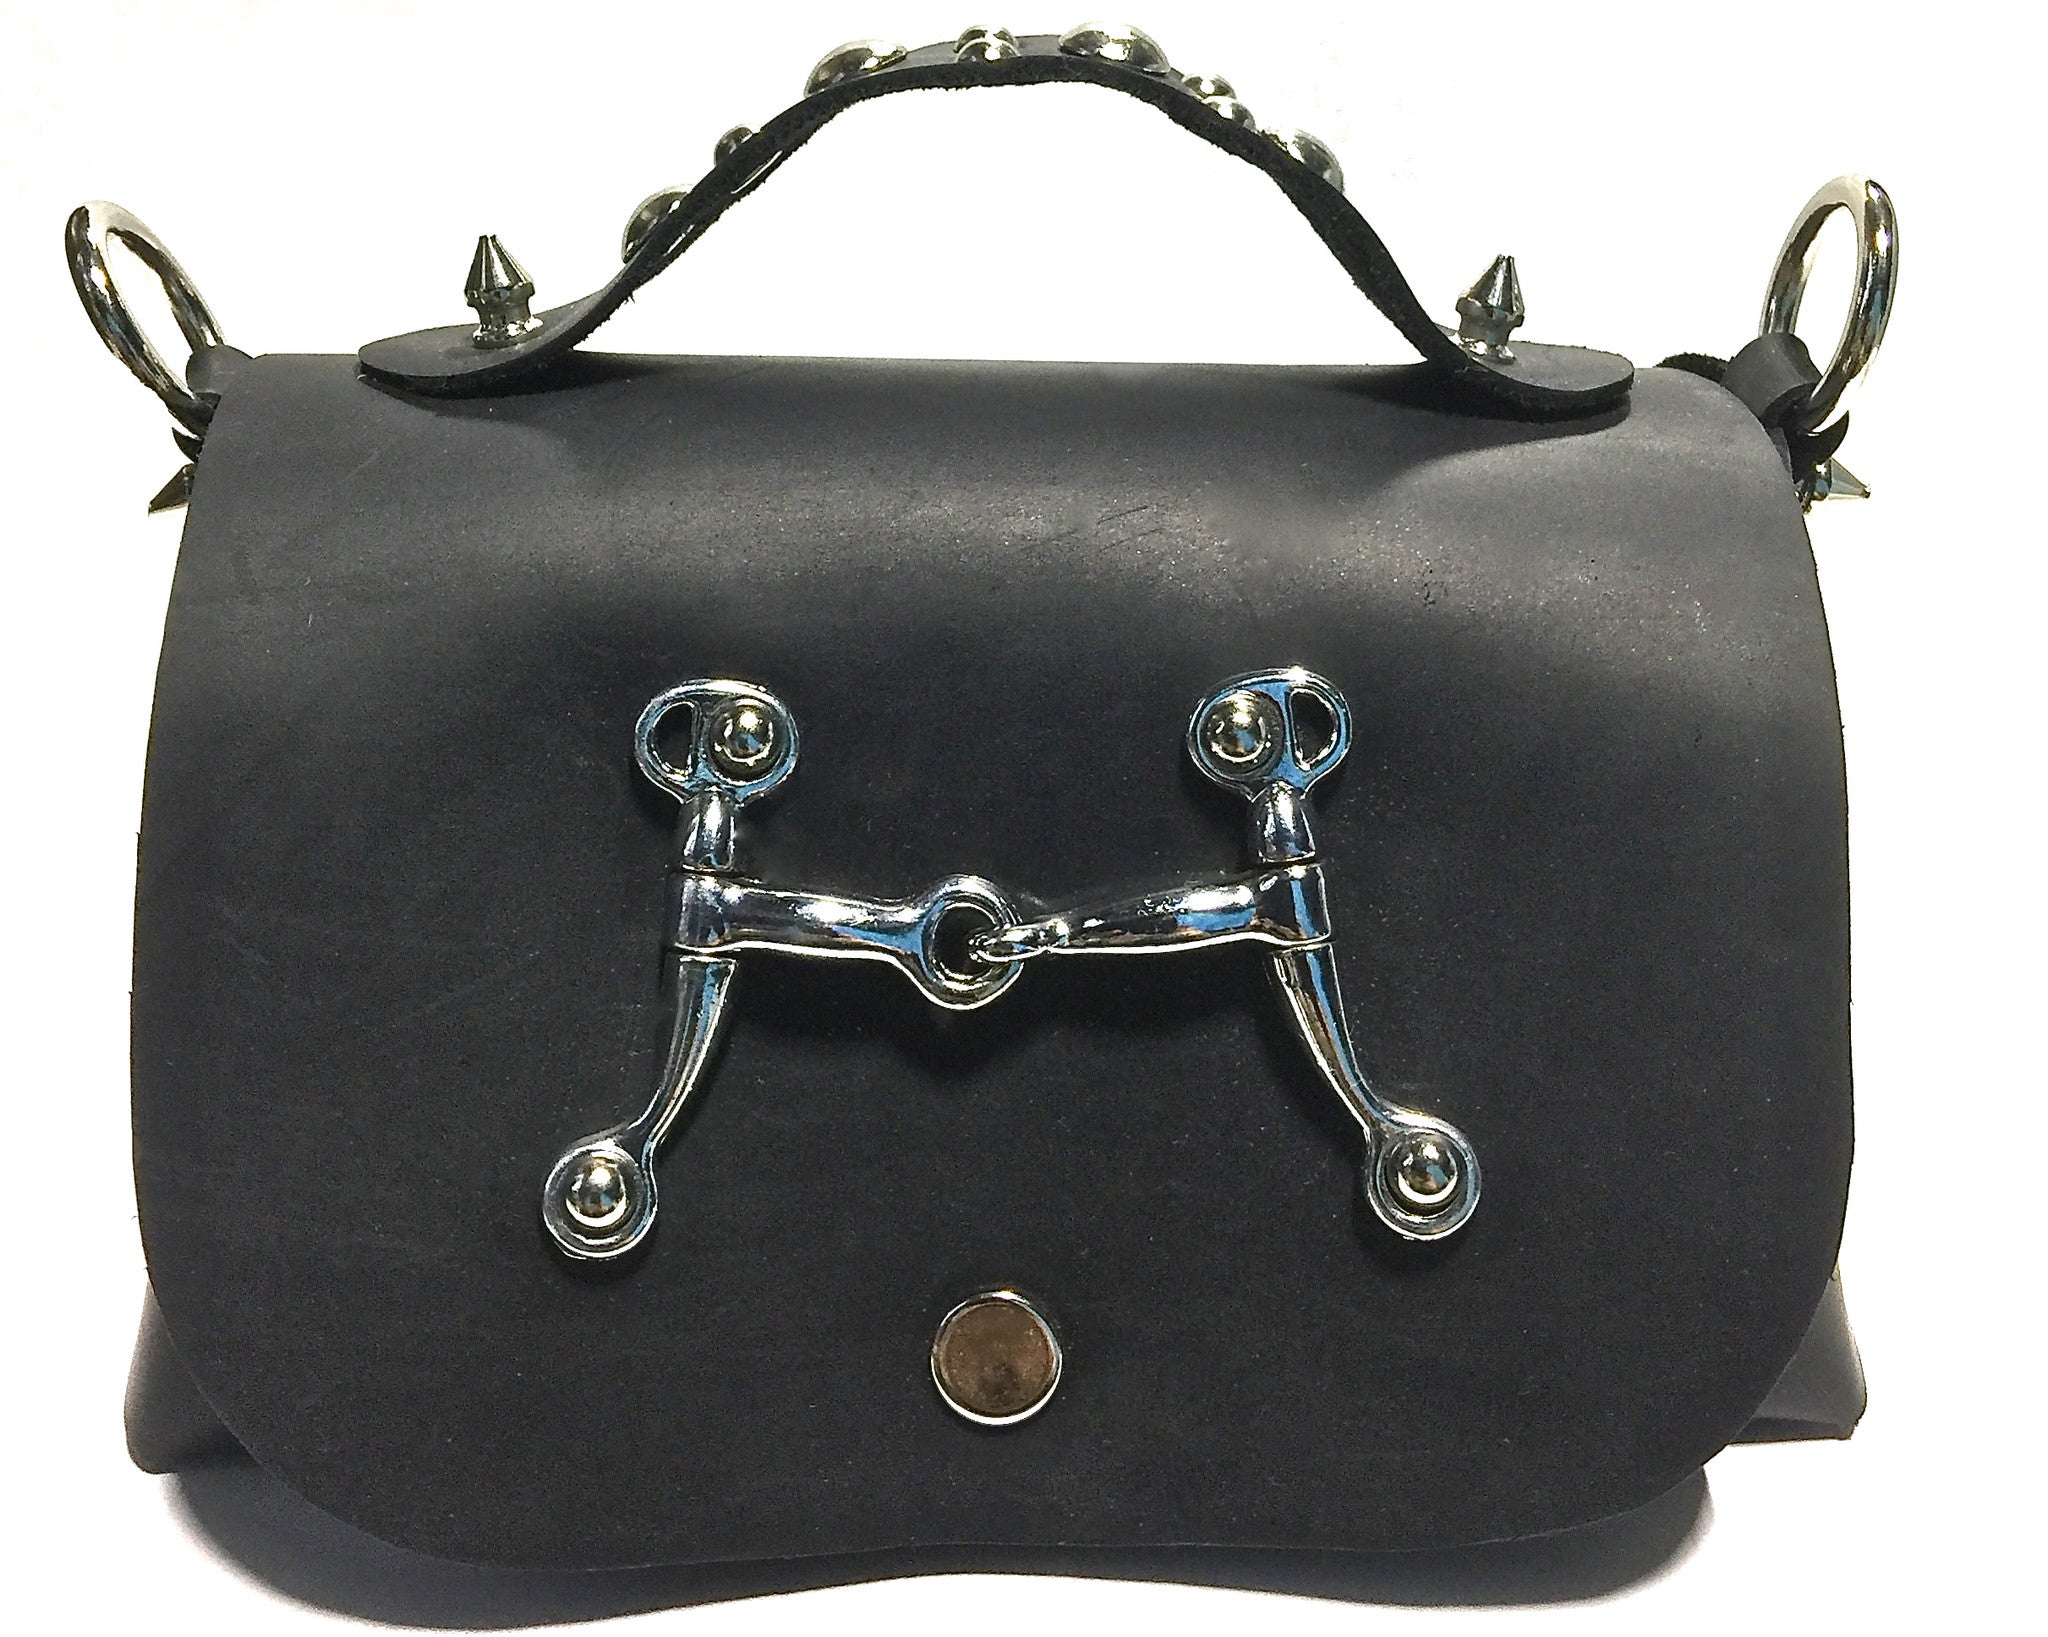 Harley Davidson Barrel Purse Black Leather Handbag Detachable Strap